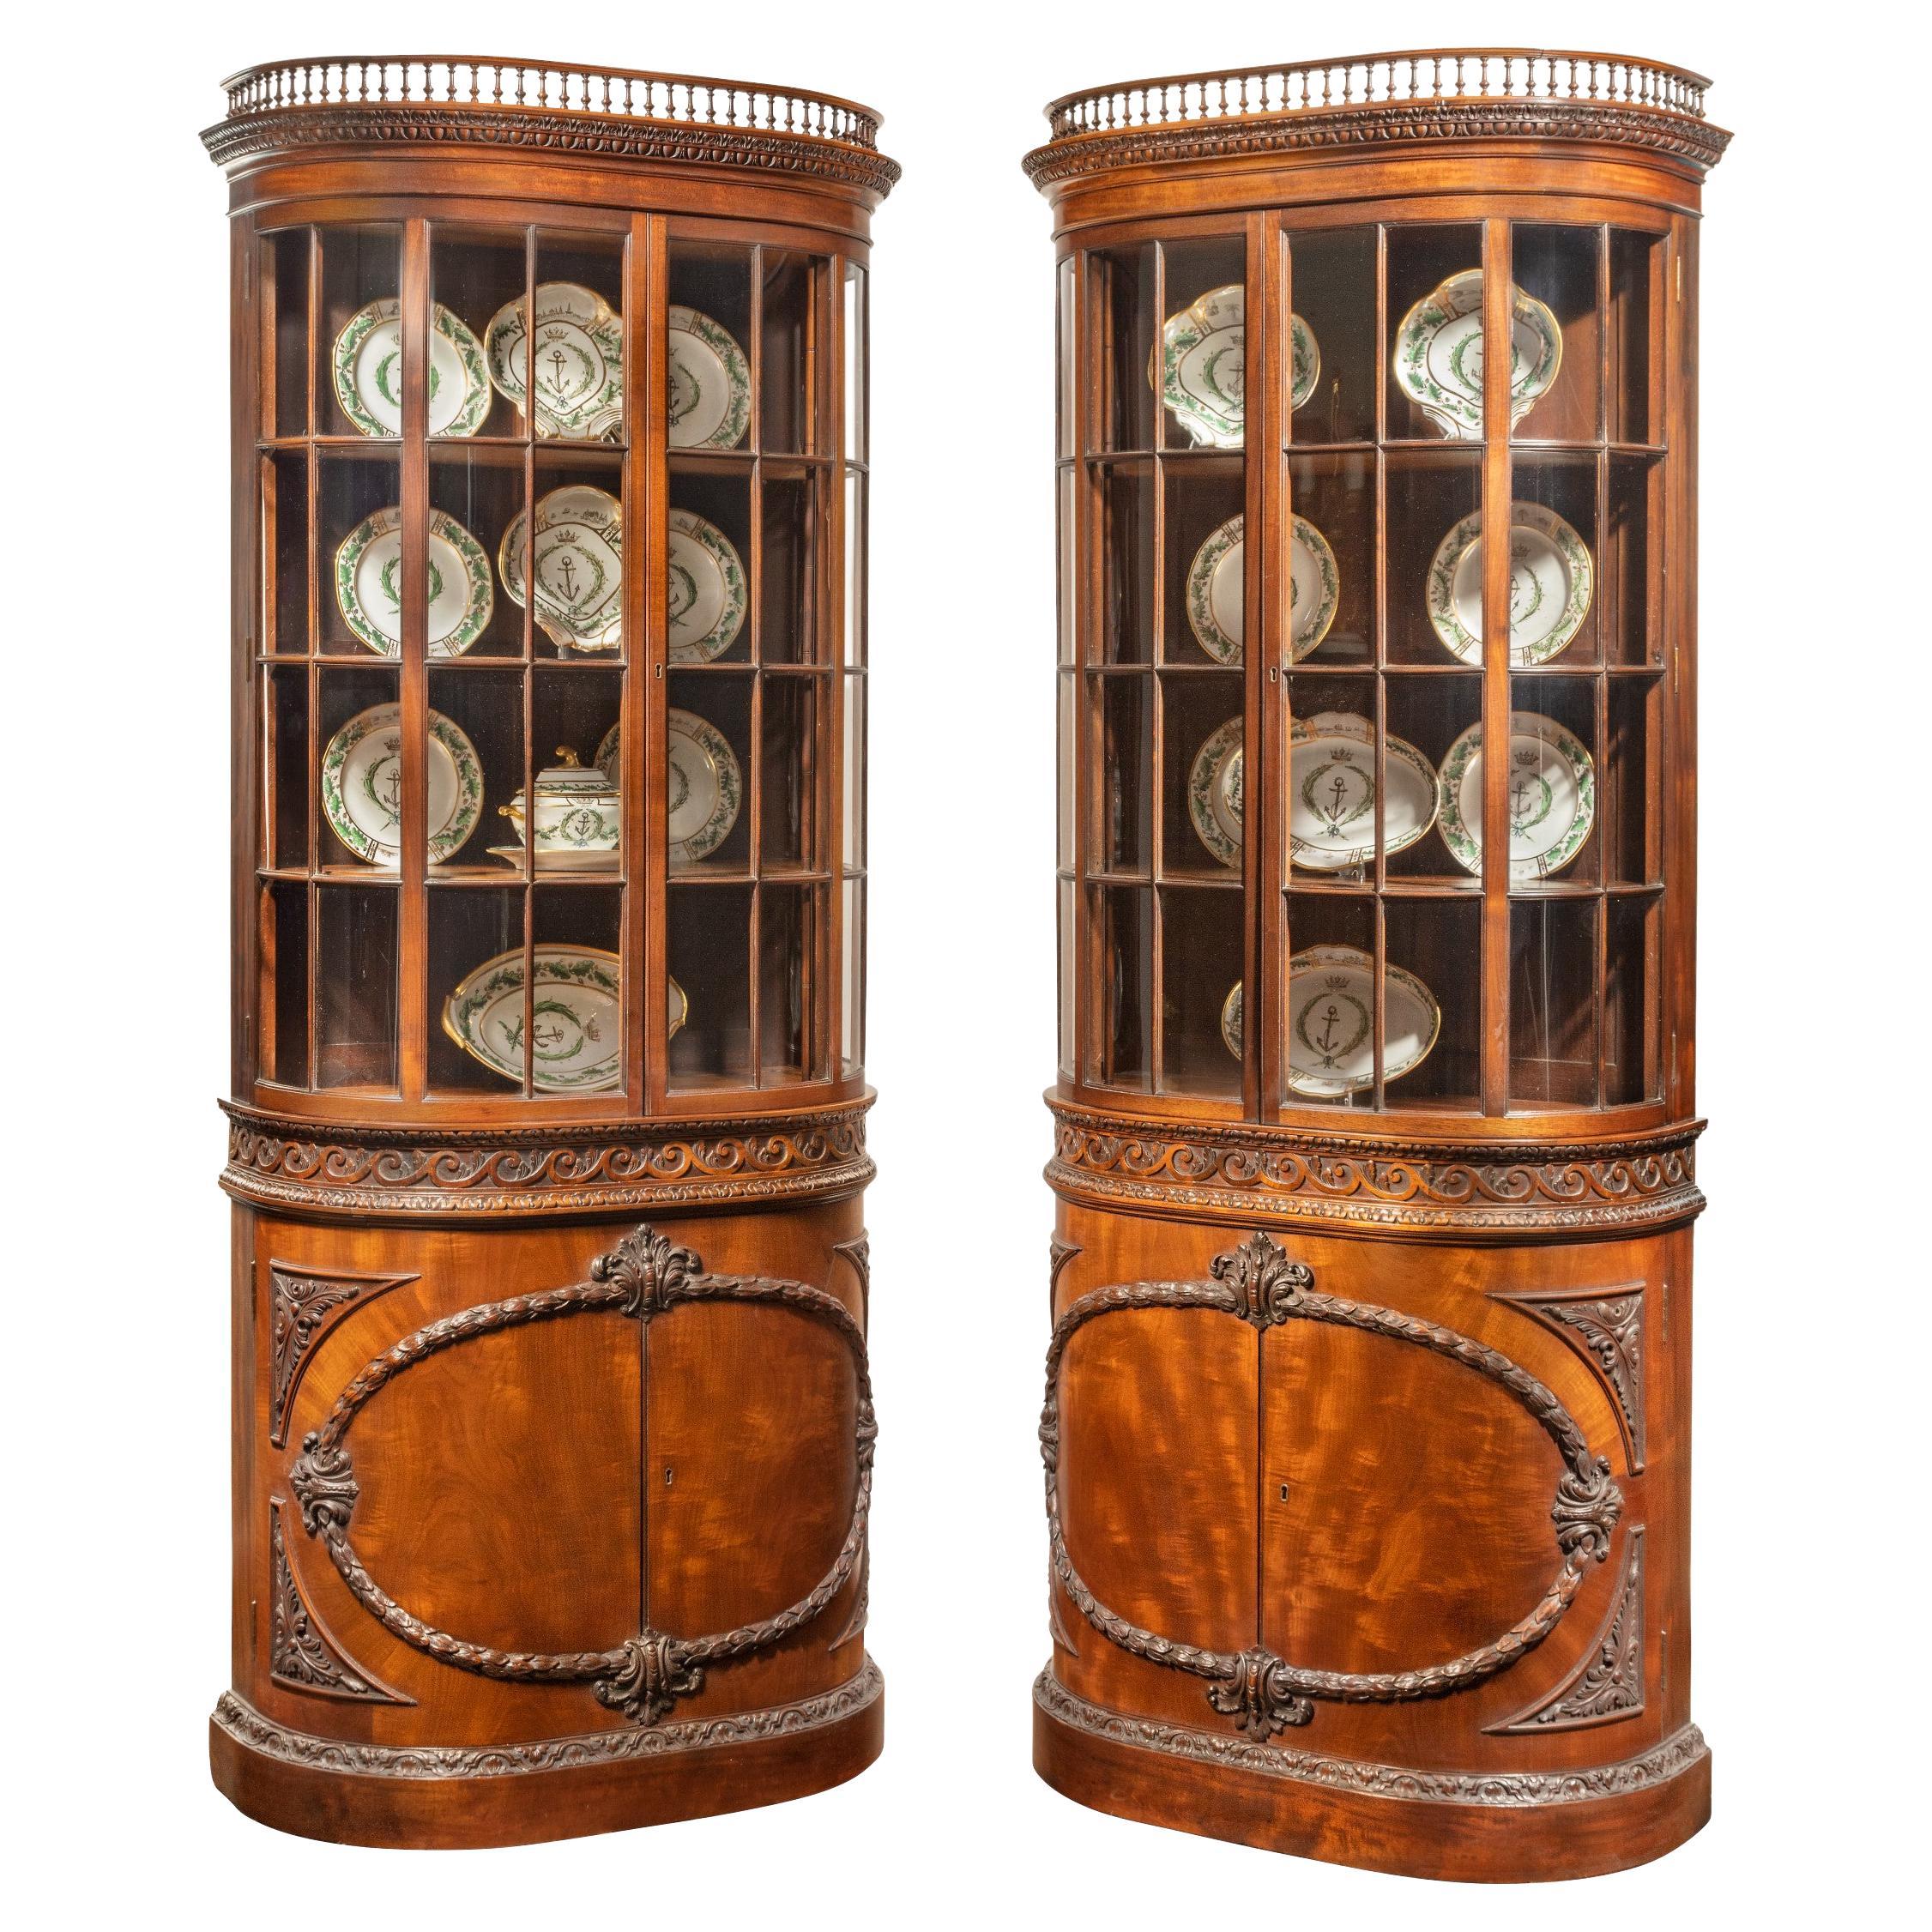 Pair of Mahogany Shaped Display Cabinets Attributed to Gillows